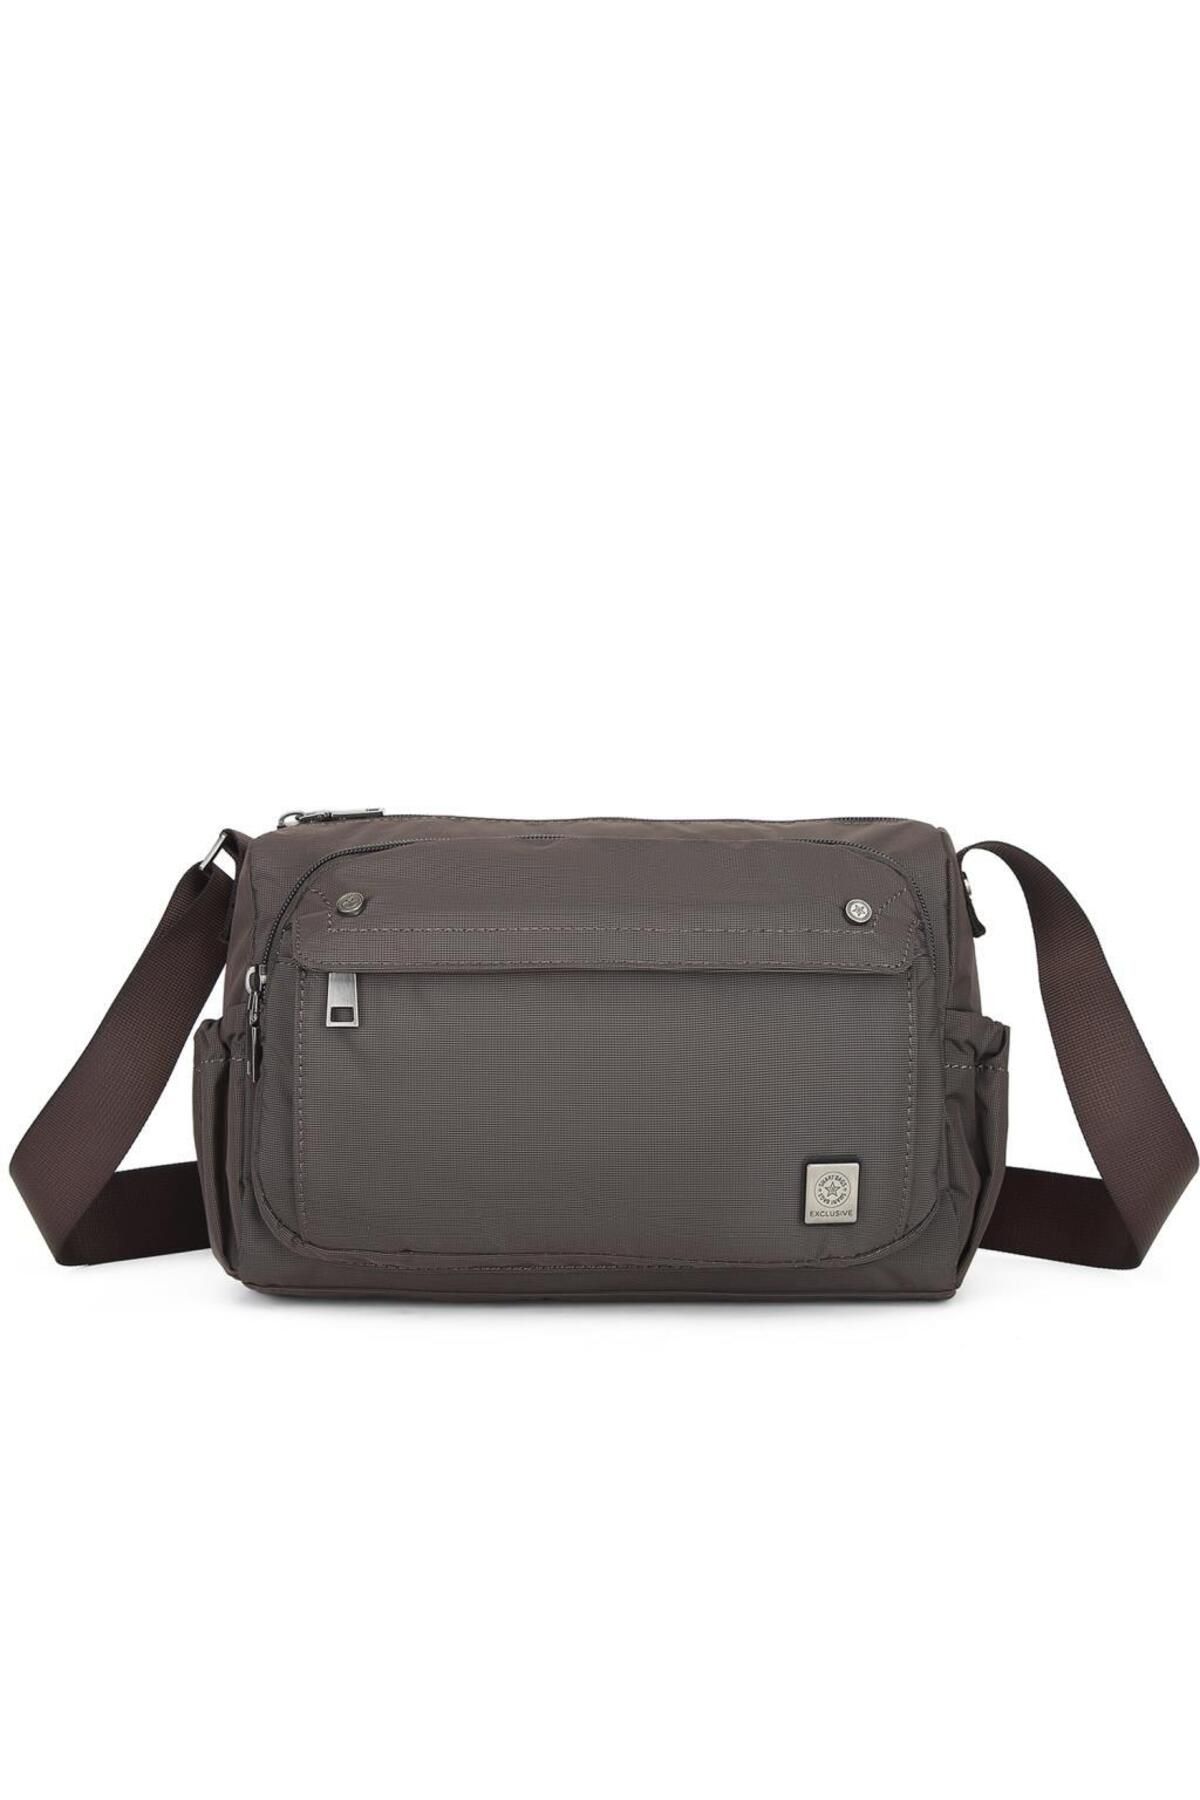 Smart Bags Exclusive Serisi Uniseks Postacı Çantası Smart Bags 8701